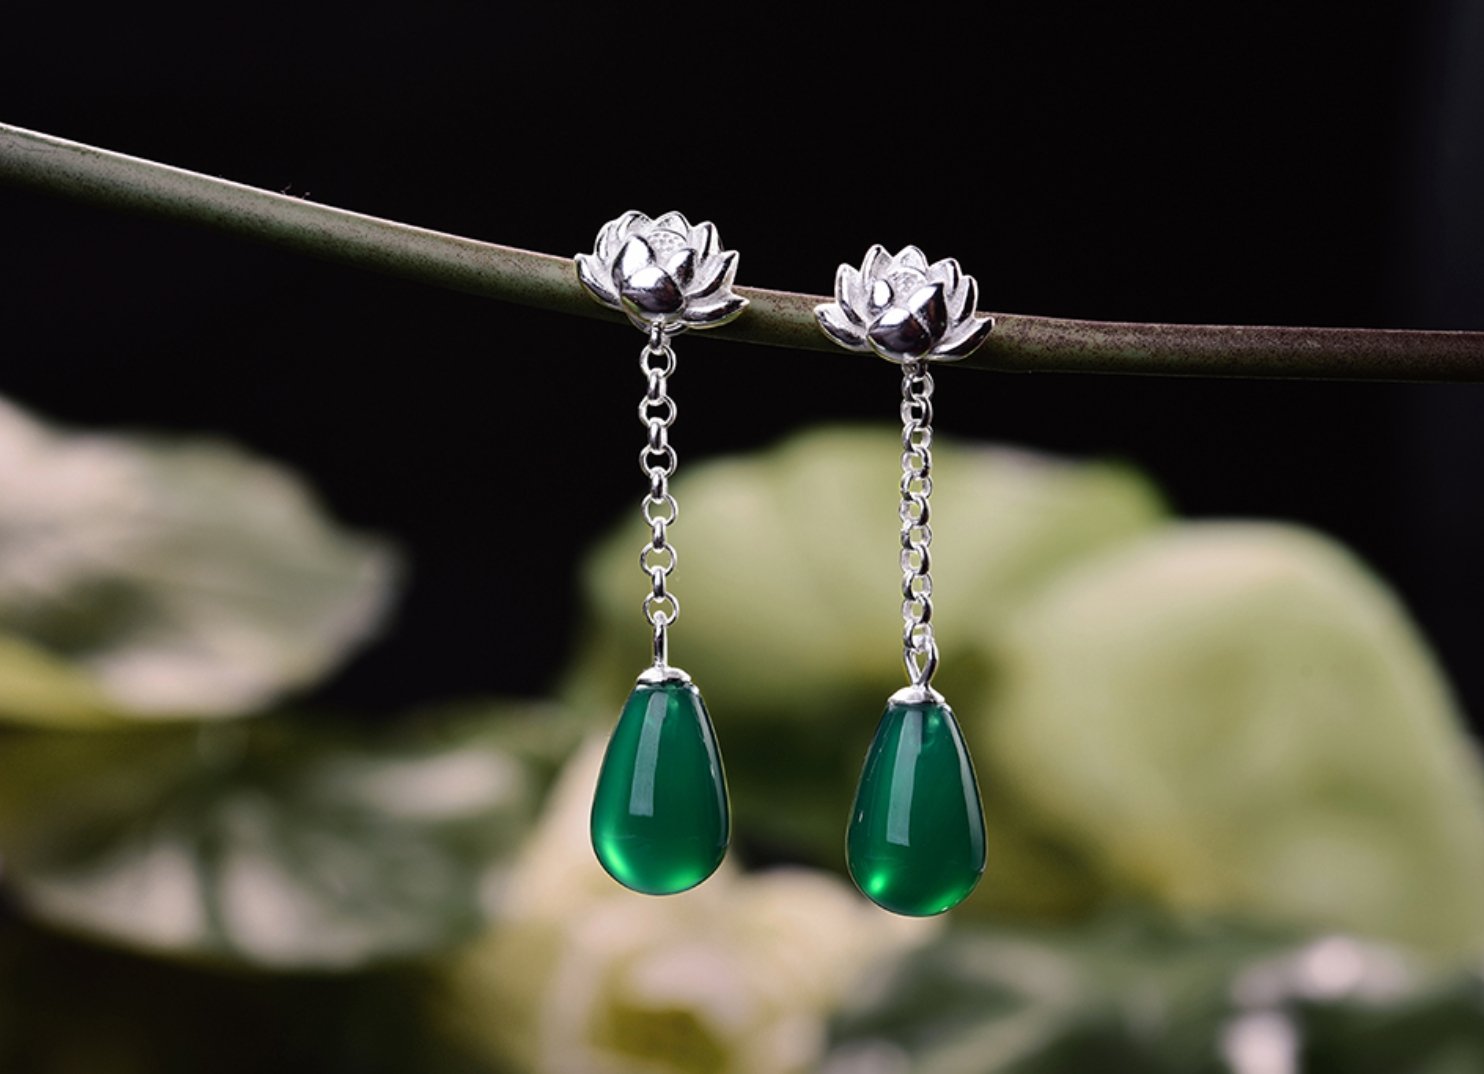 Green Jade Earrings in Rhodium Overlay Sterling Silver 44.80 Ct. - 7693165  - TJC